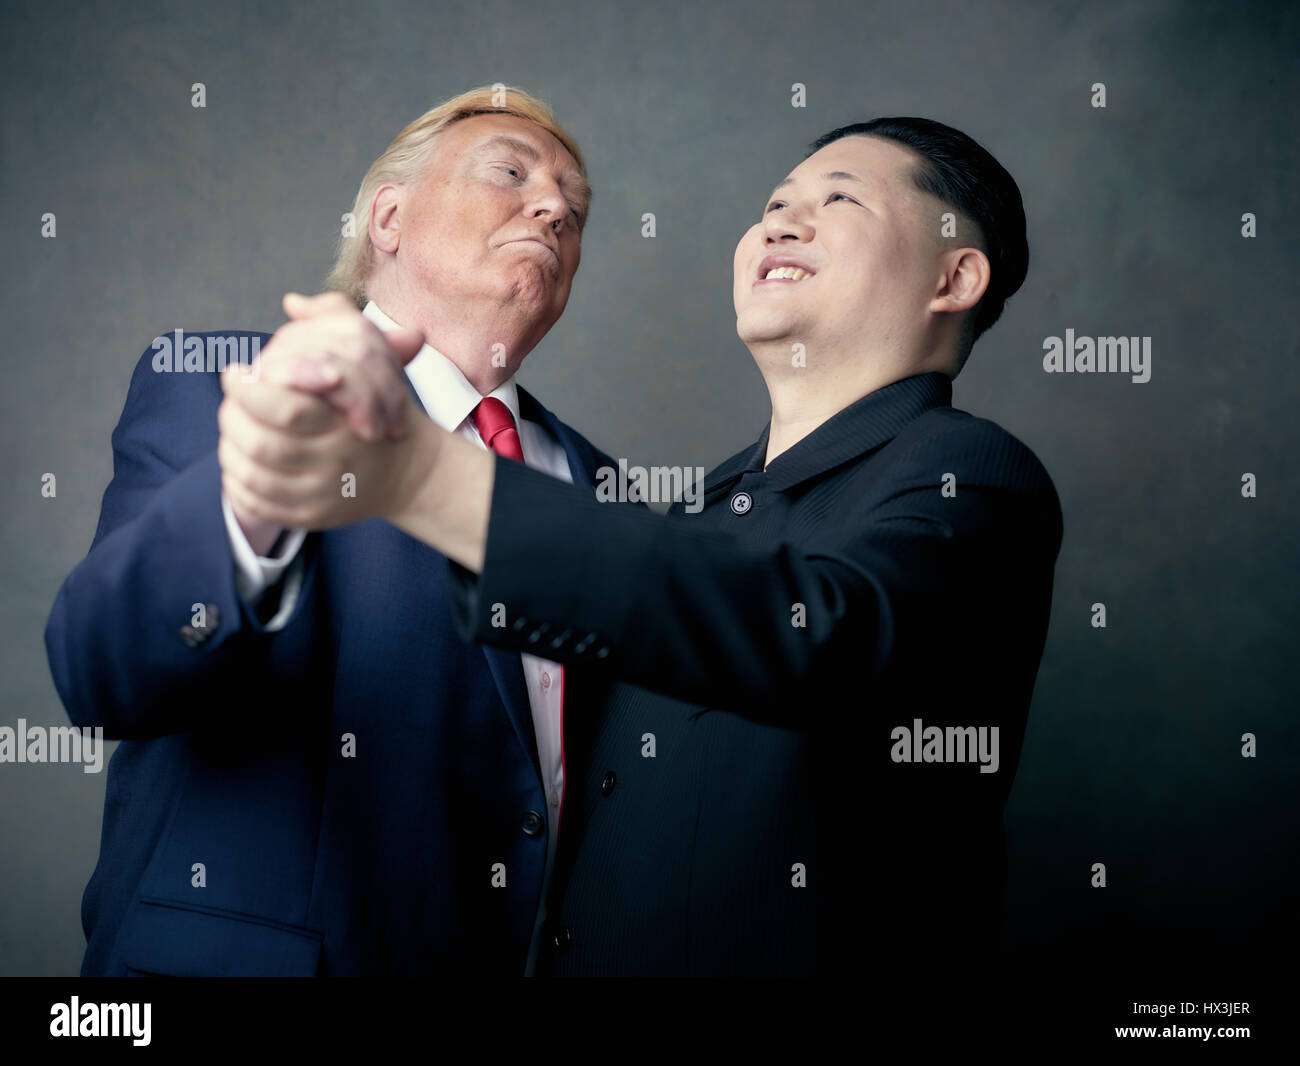 president-donald-trump-lookalike-and-supreme-leader-of-north-korea-HX3JER.jpg